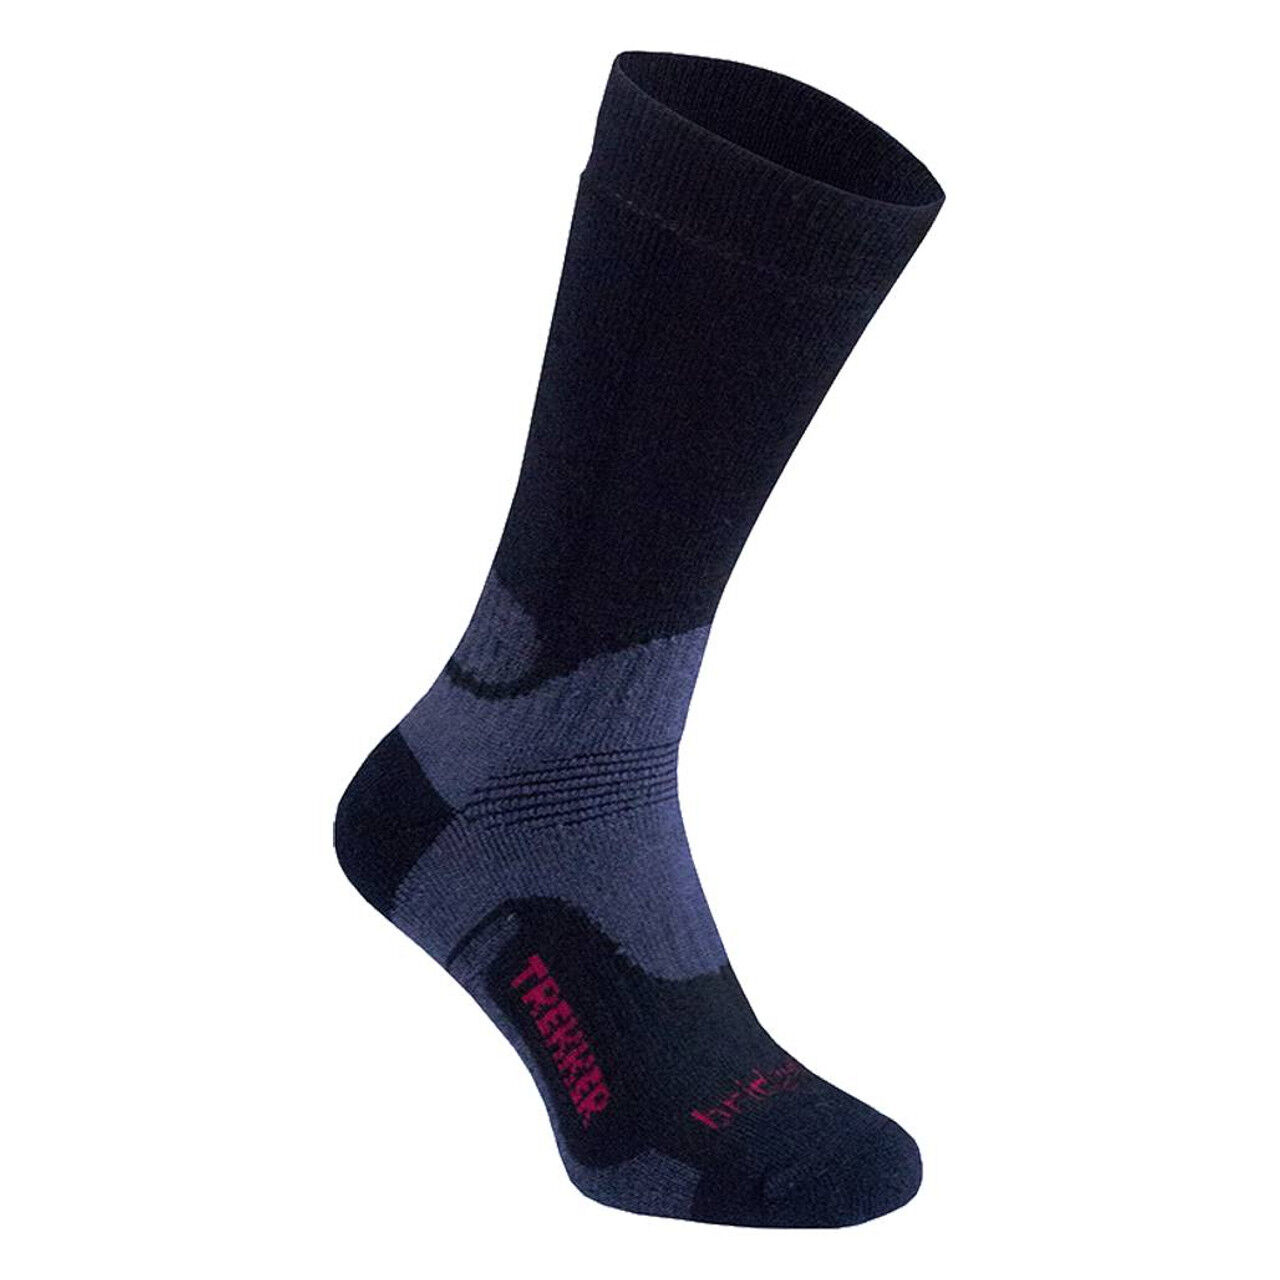 Bridgedale Men's Hike Midweight Merino Performance Boot Original Socks  - Black